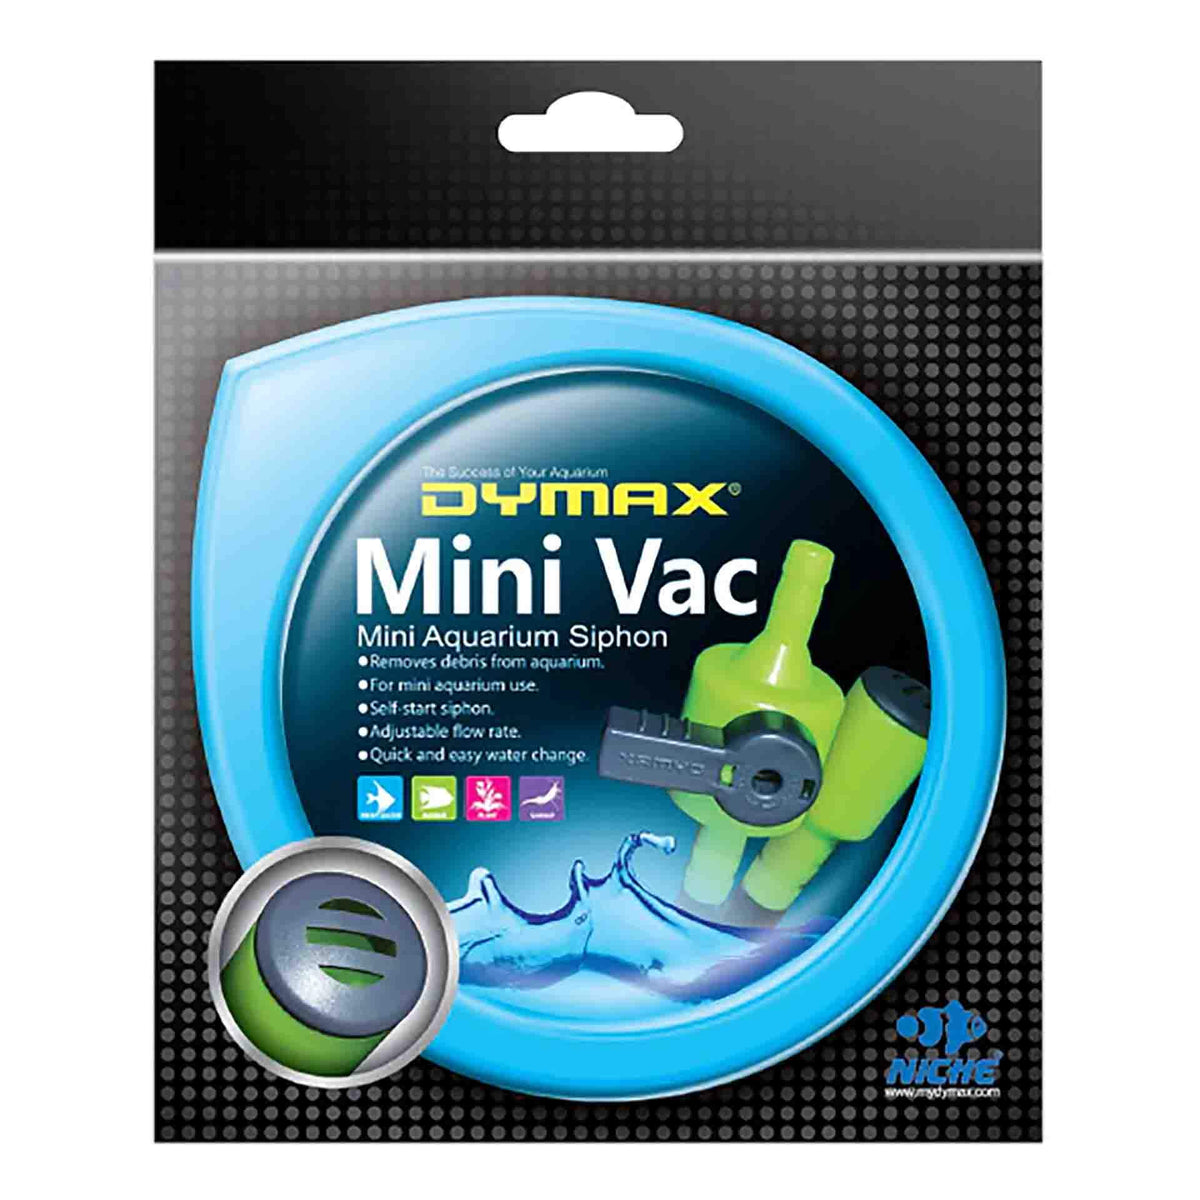 Dymax Mini Vac - Mini Aquarium Siphon